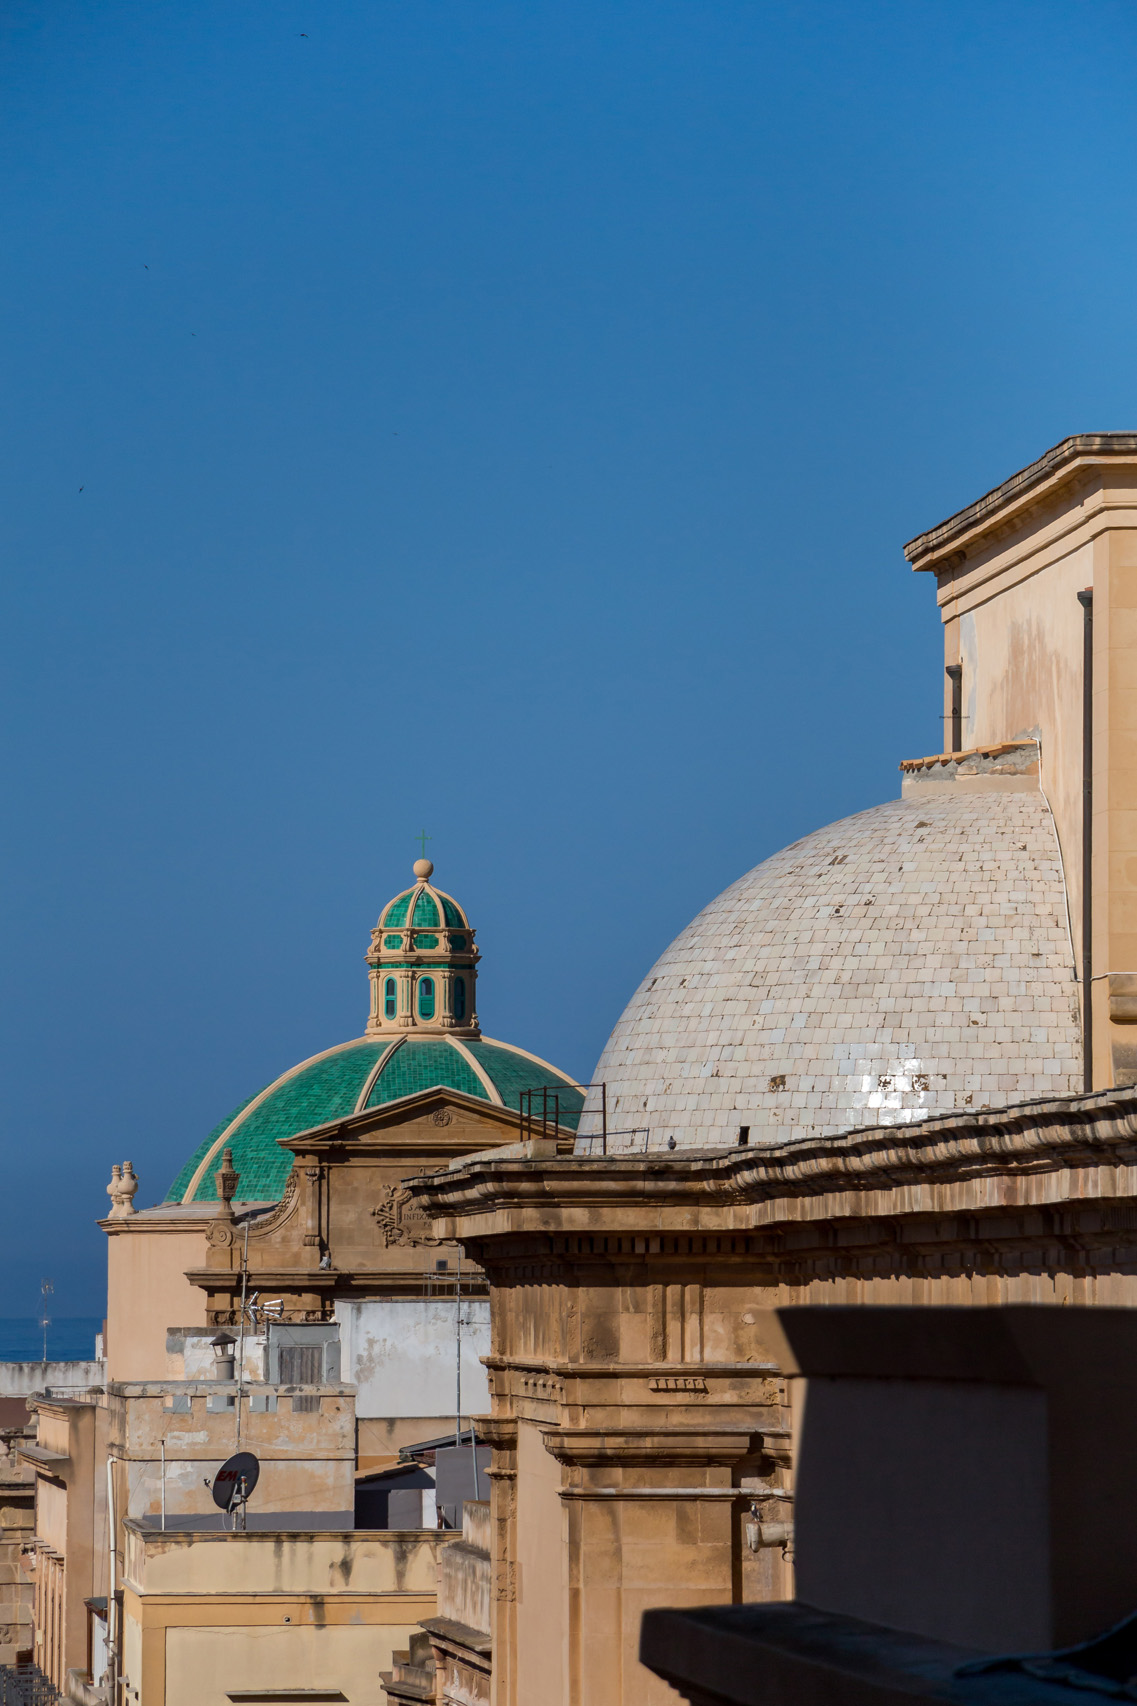 Roofs of Marsala, Sicily